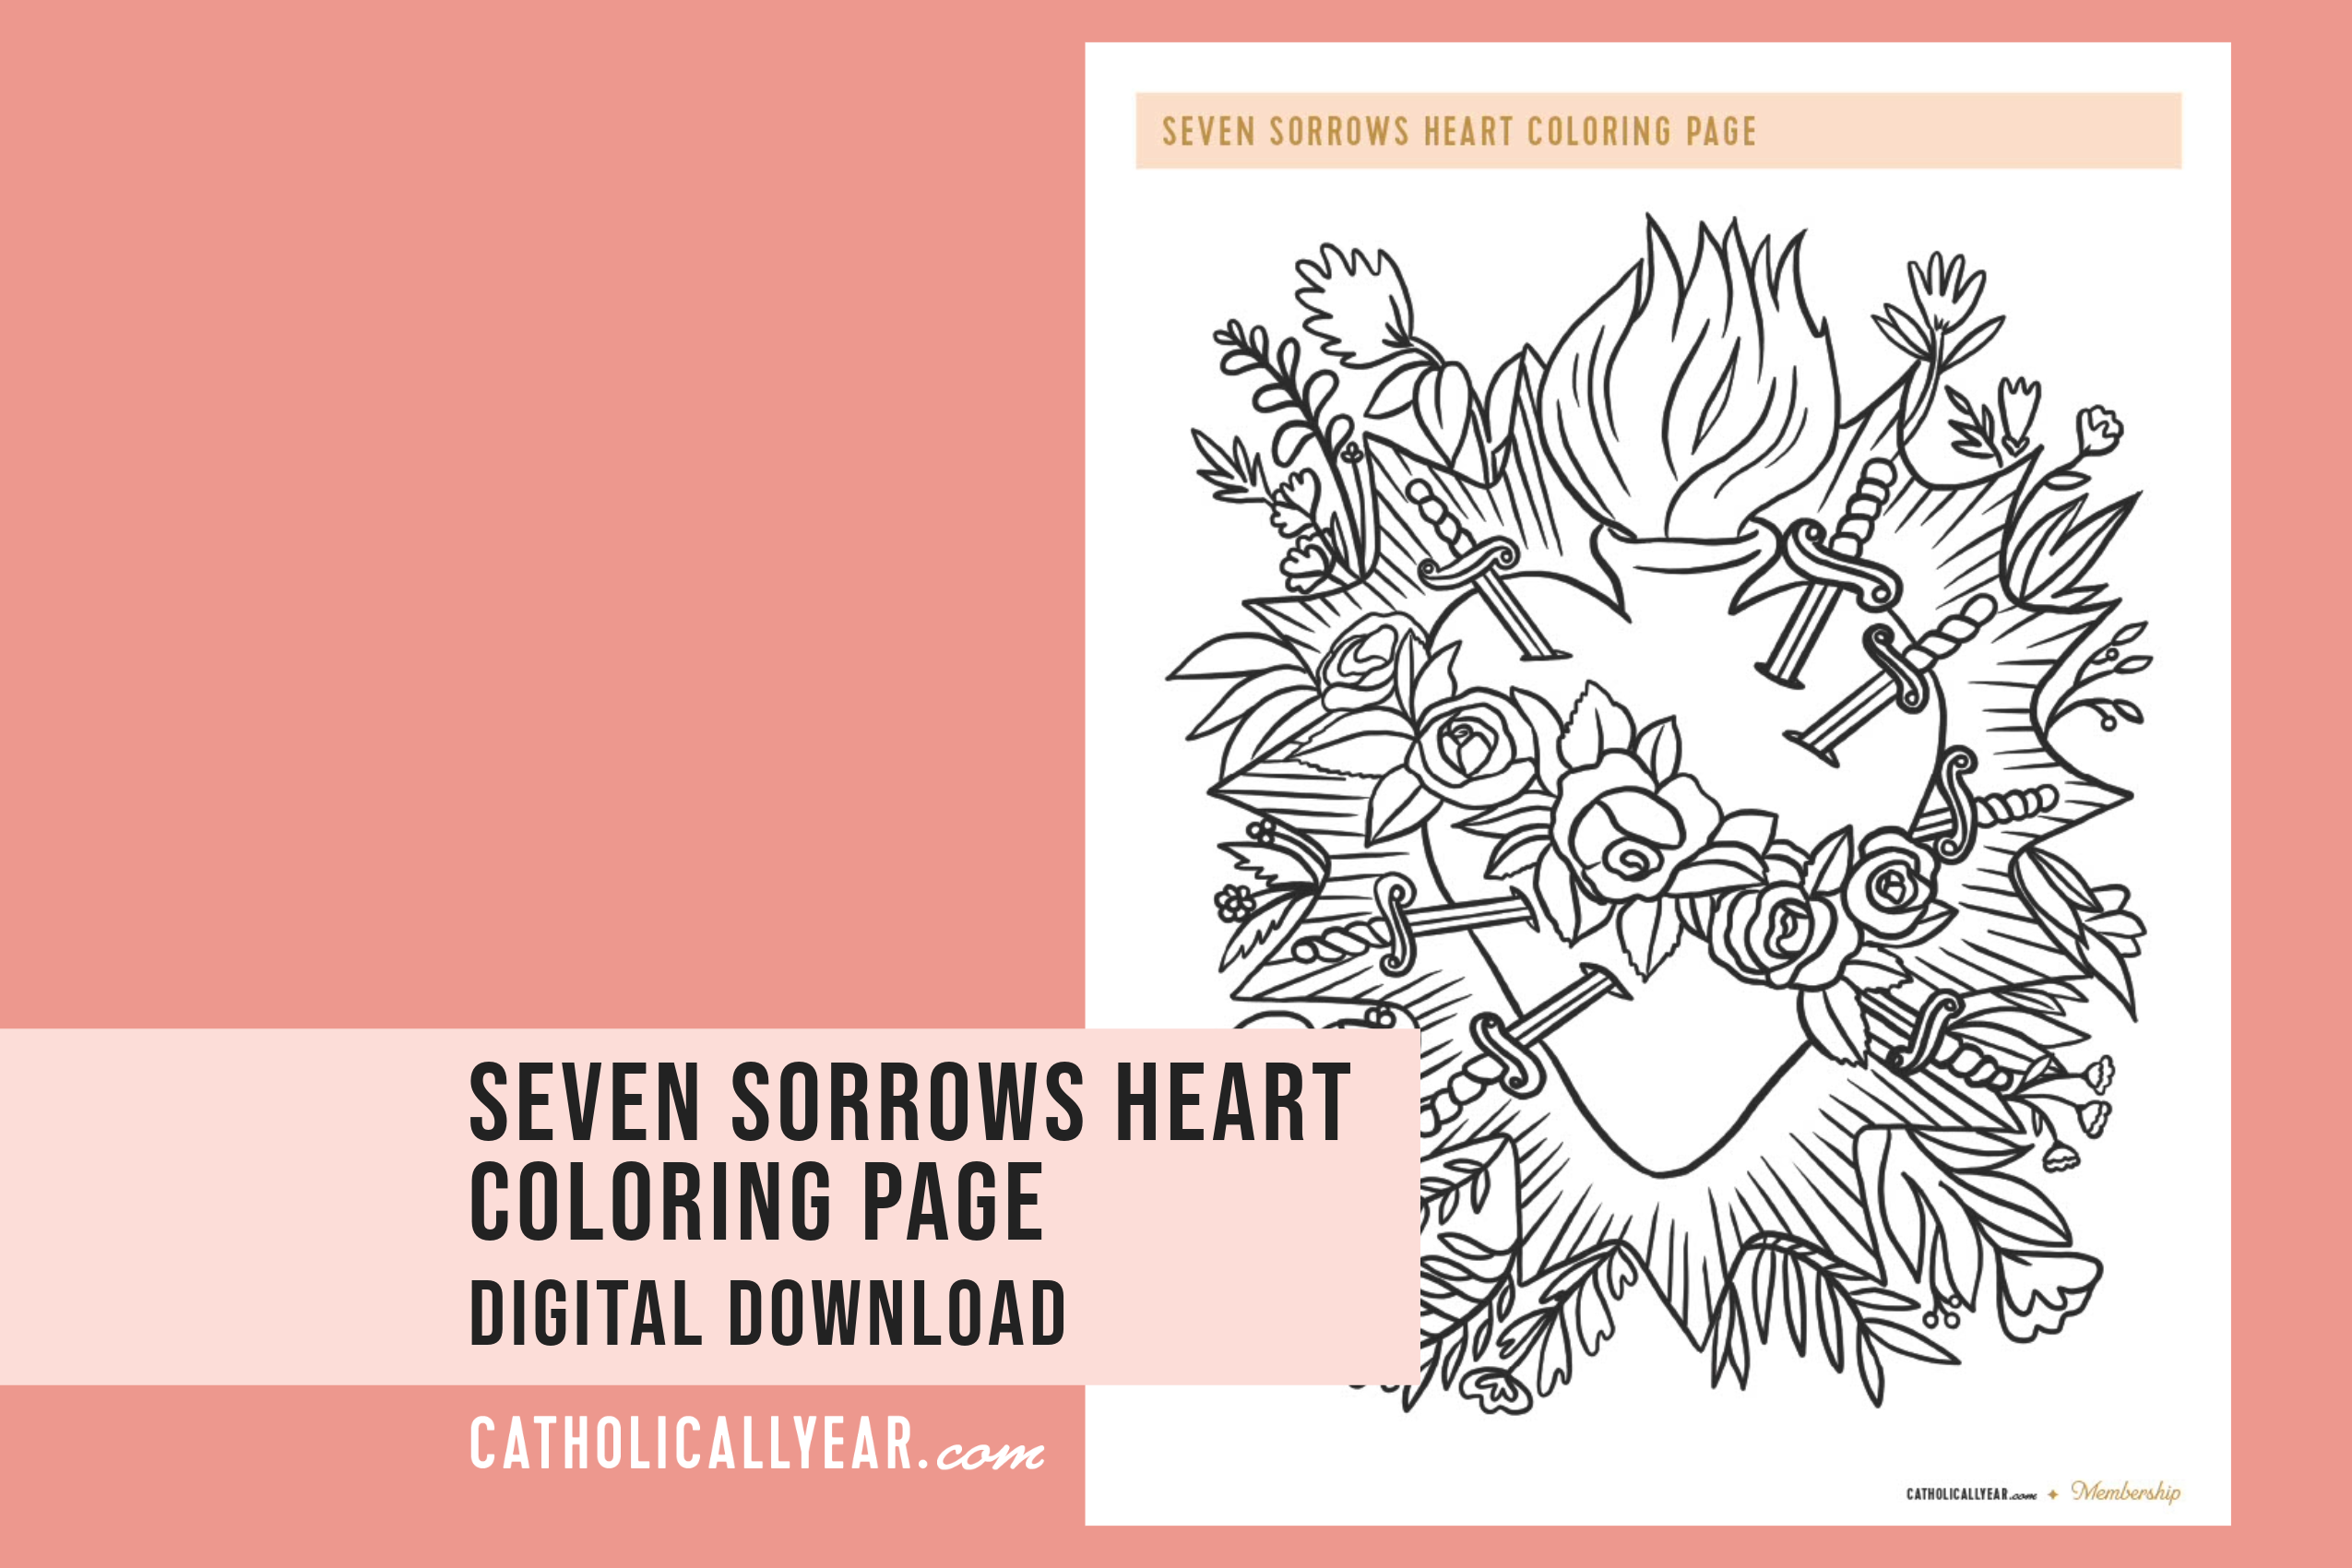 Seven Sorrows Heart Coloring Page {Digital Download}